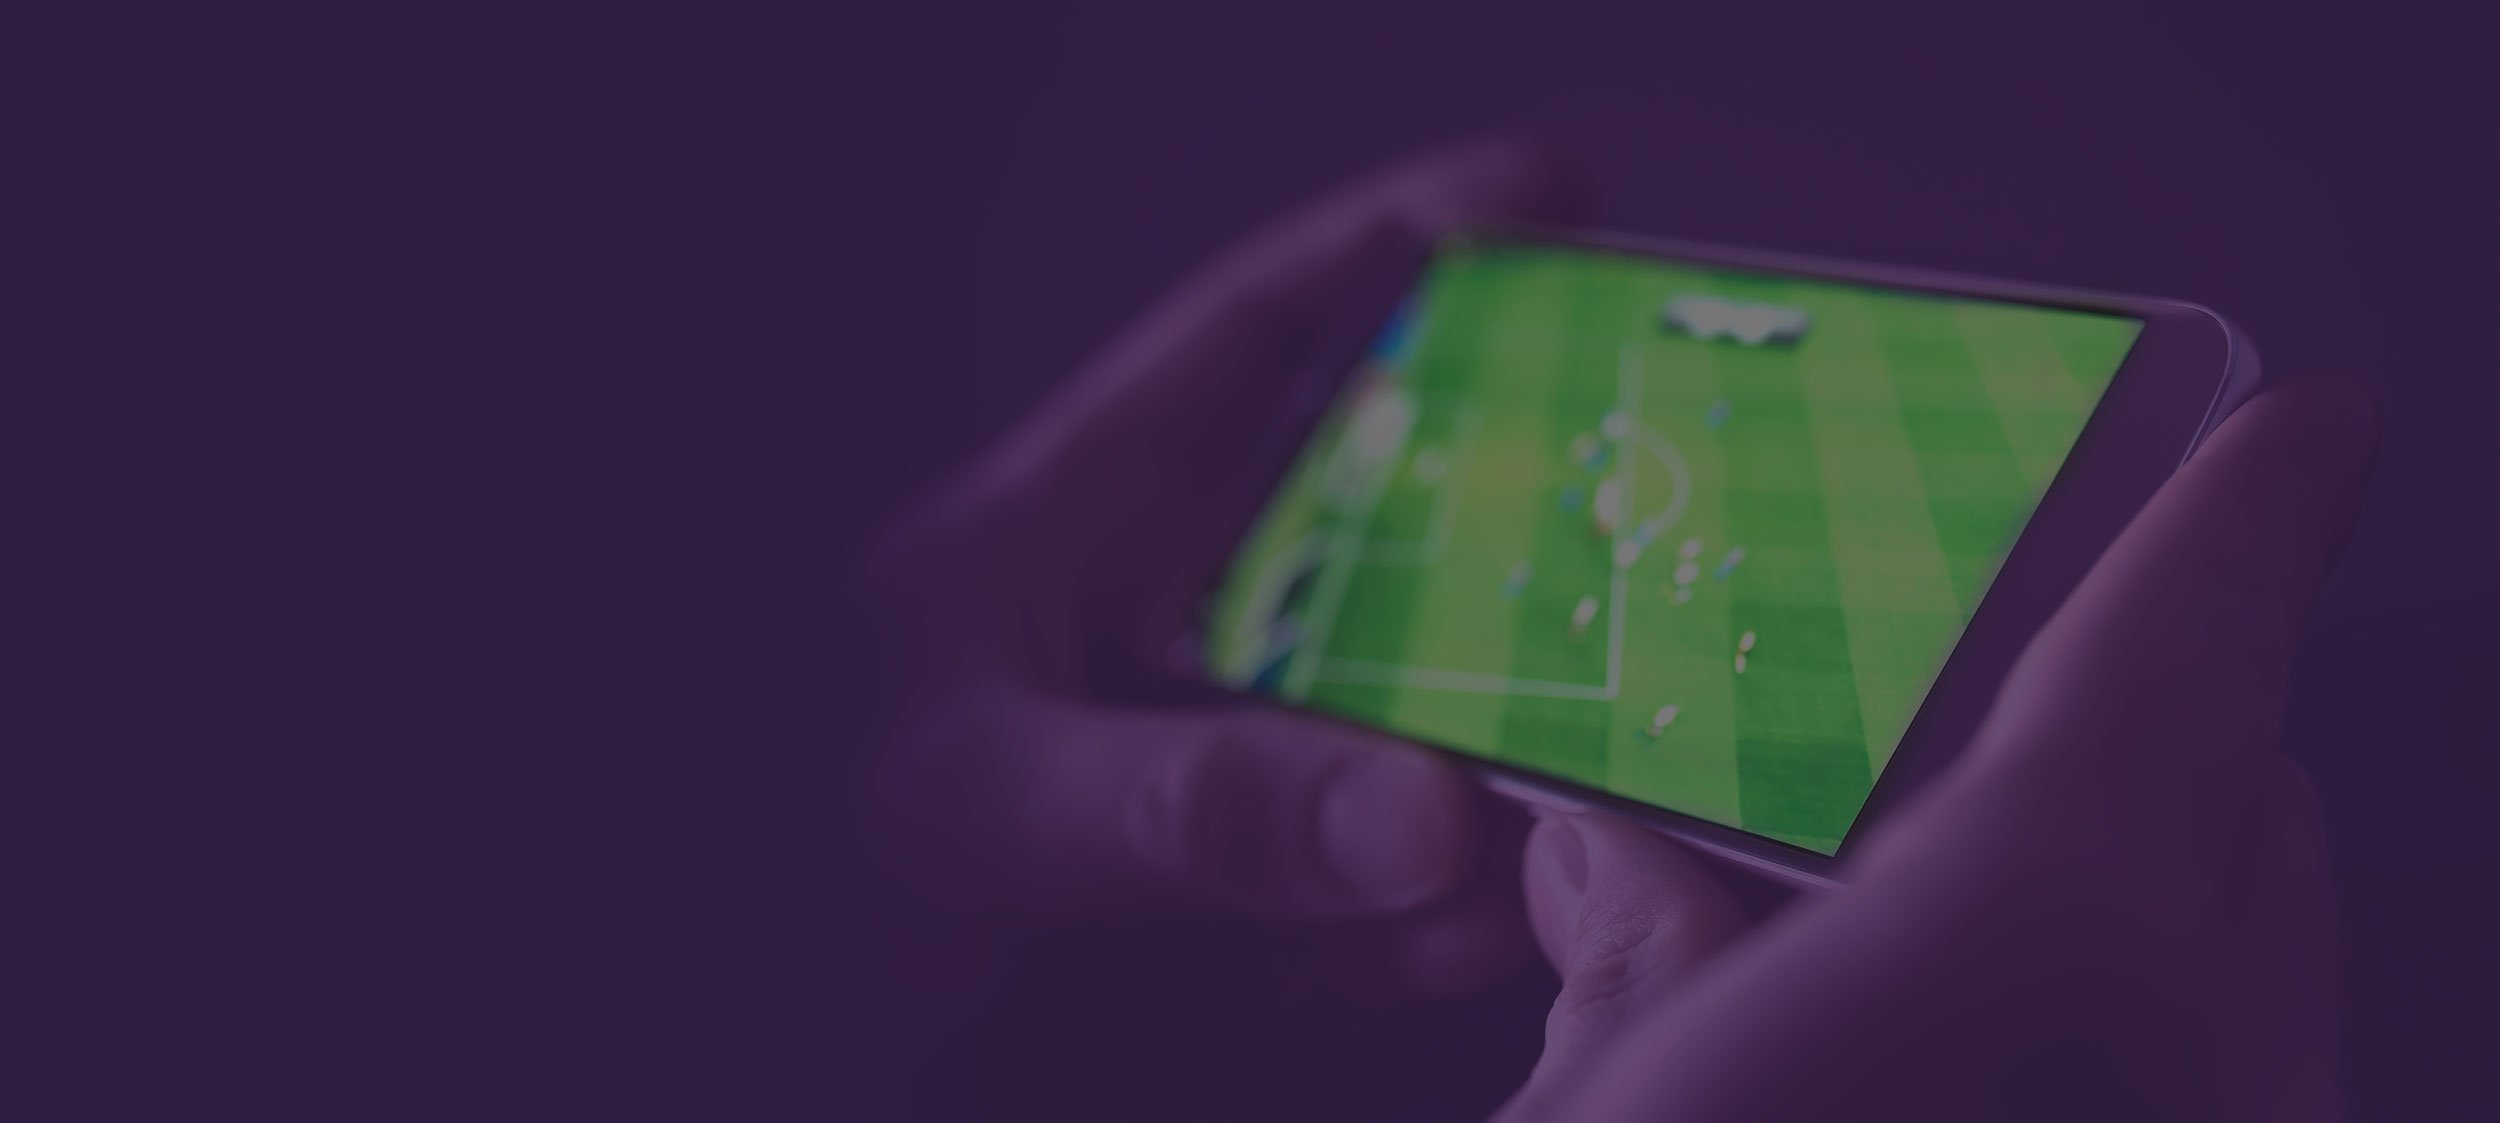 Watching-football-on-mobile-purple